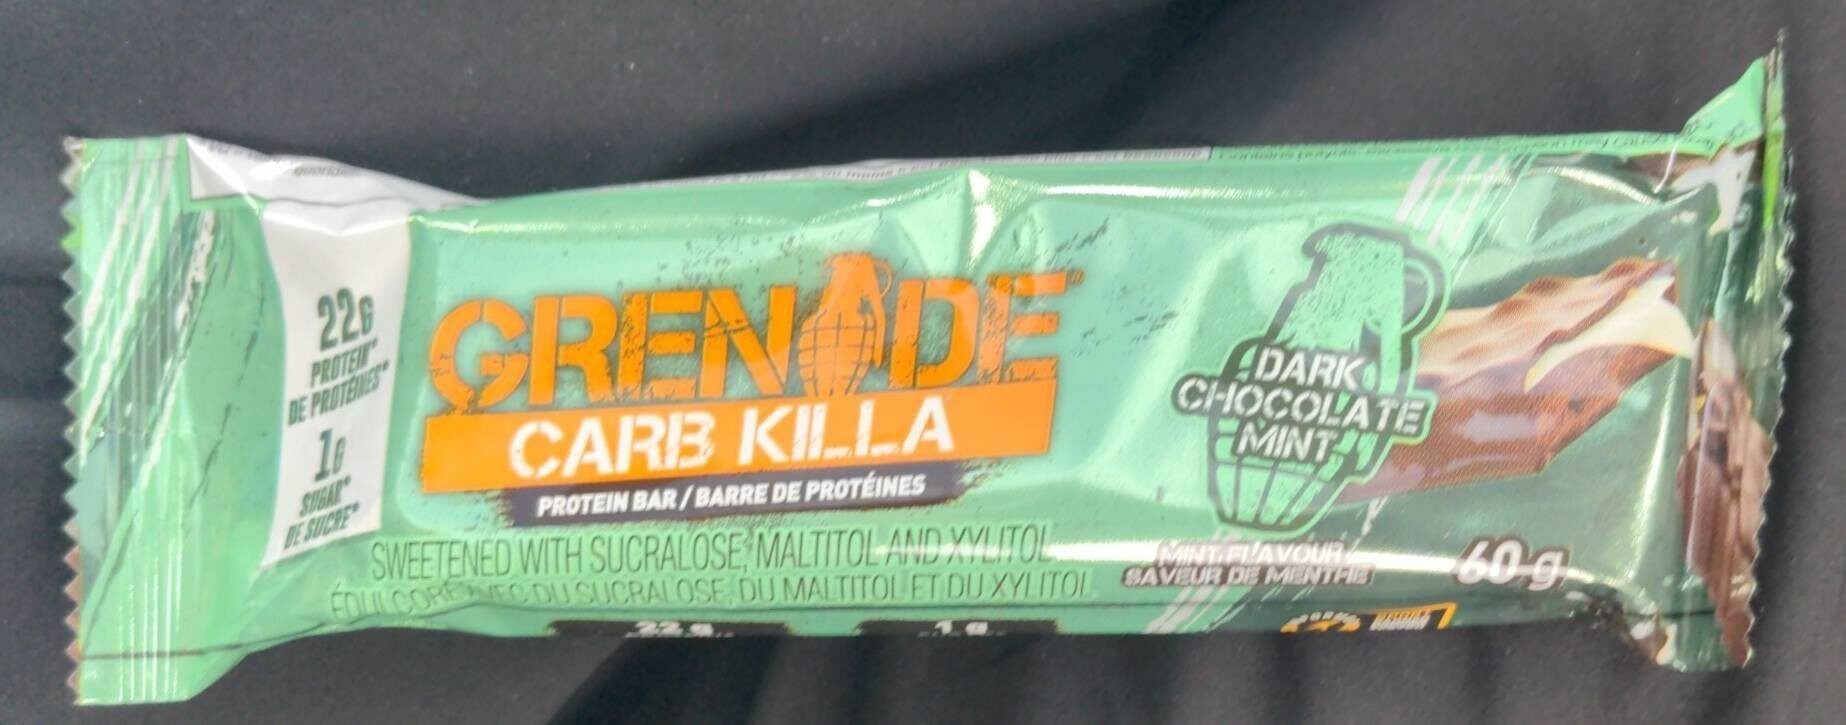 Grenade Carb Killa - Produit